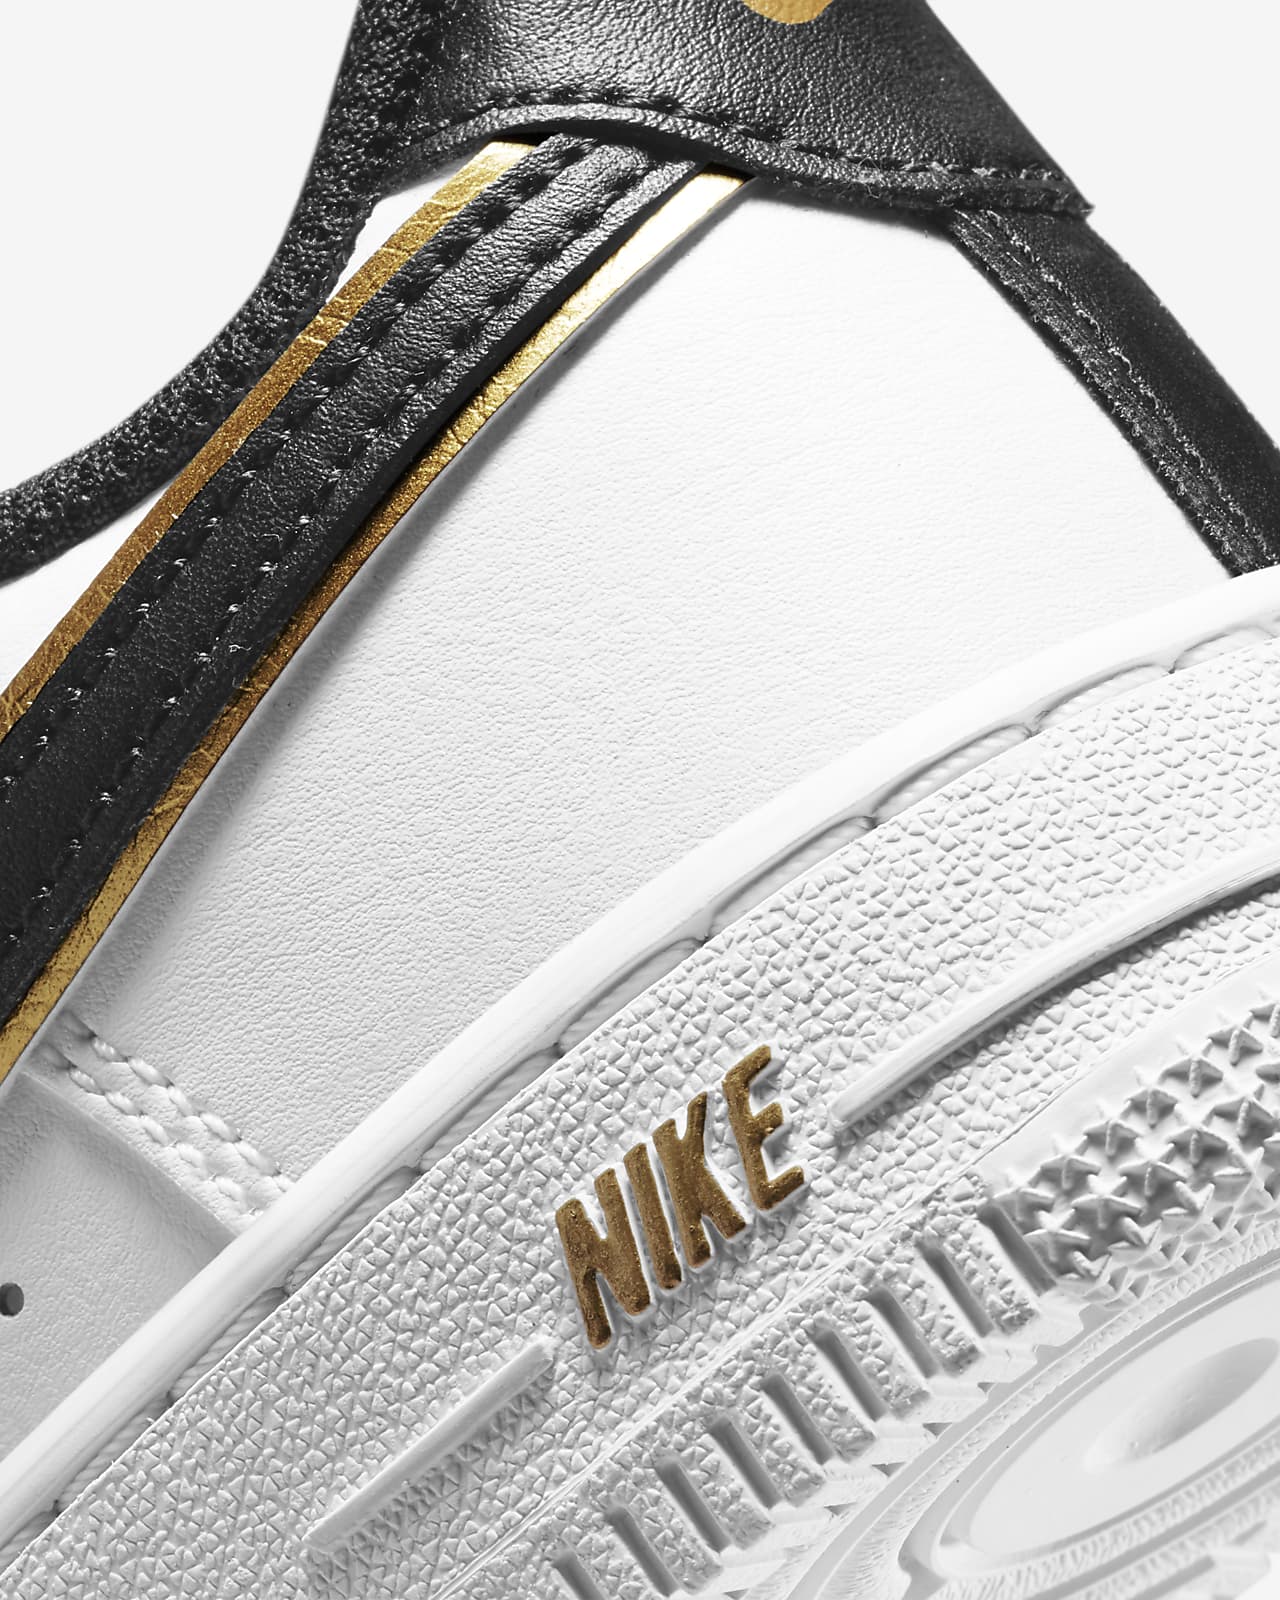 Nike Air Force 1 '07 LV8 White/Black-Metallic Gold-White